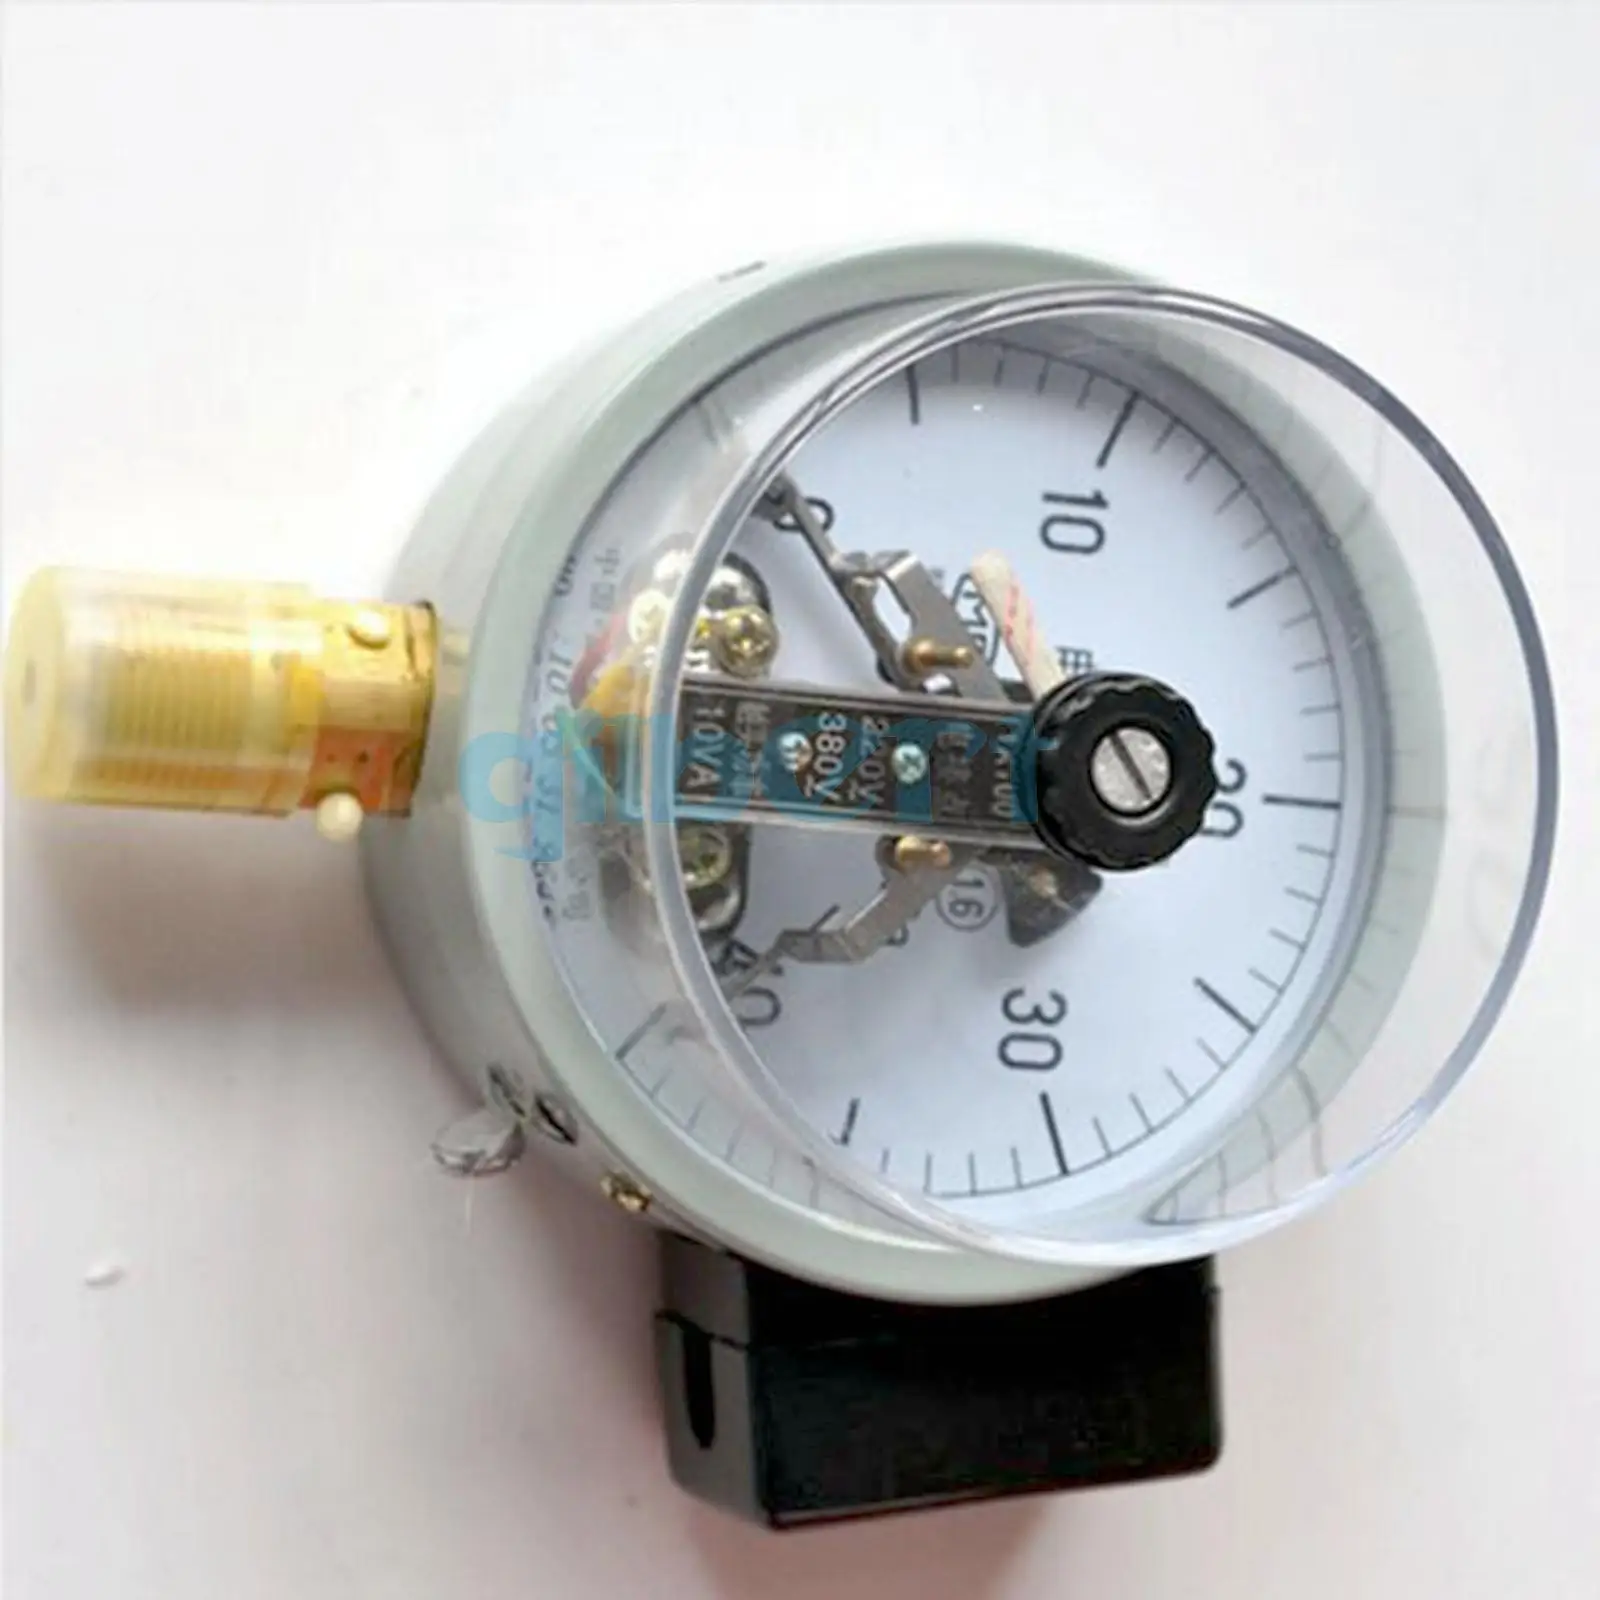 contact électrique jauge de pression YX-100 gamme 0.1-60 MPA cadran diam 3.9 in environ 9.91 cm